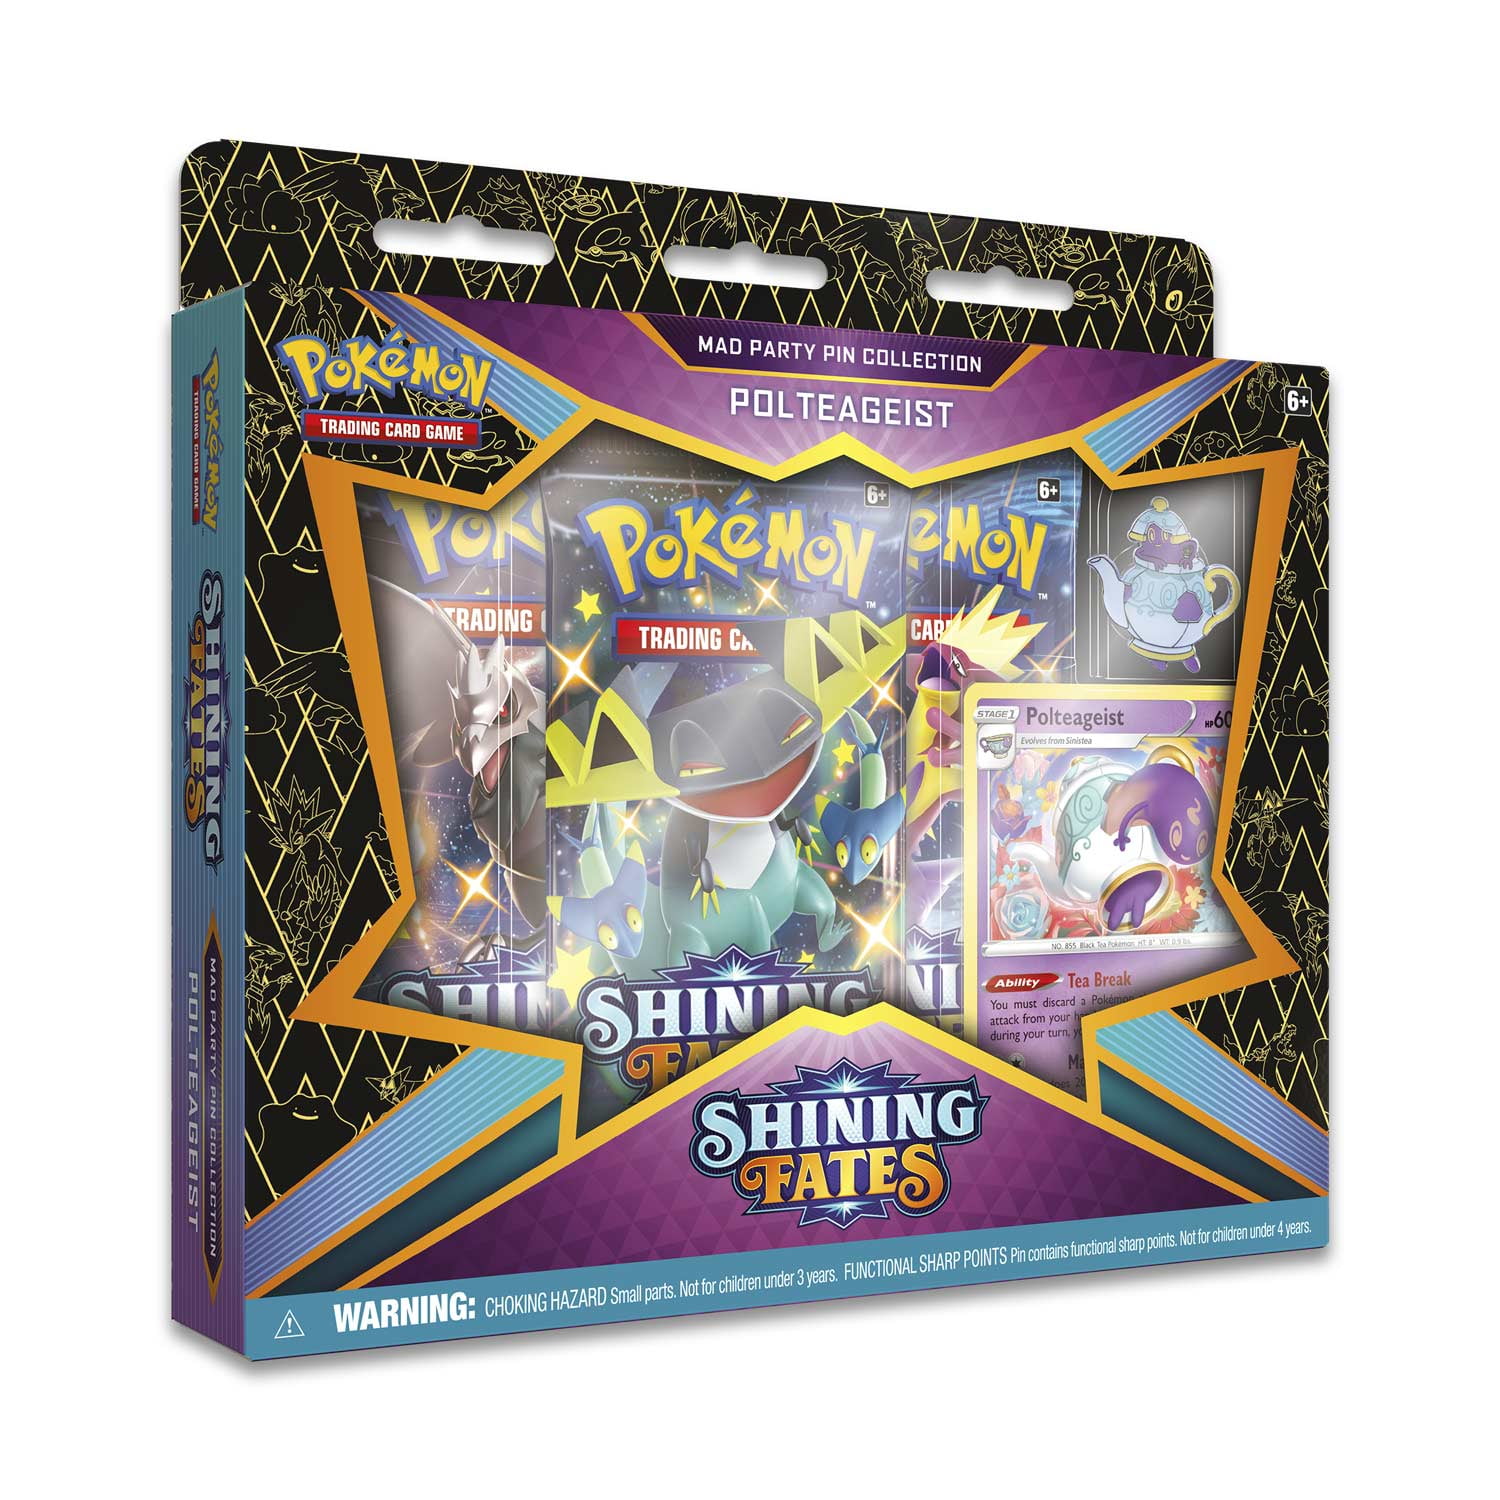 5 Booster Pokemon Shining Fates boltund V Tin-box inglés nuevo embalaje original! 